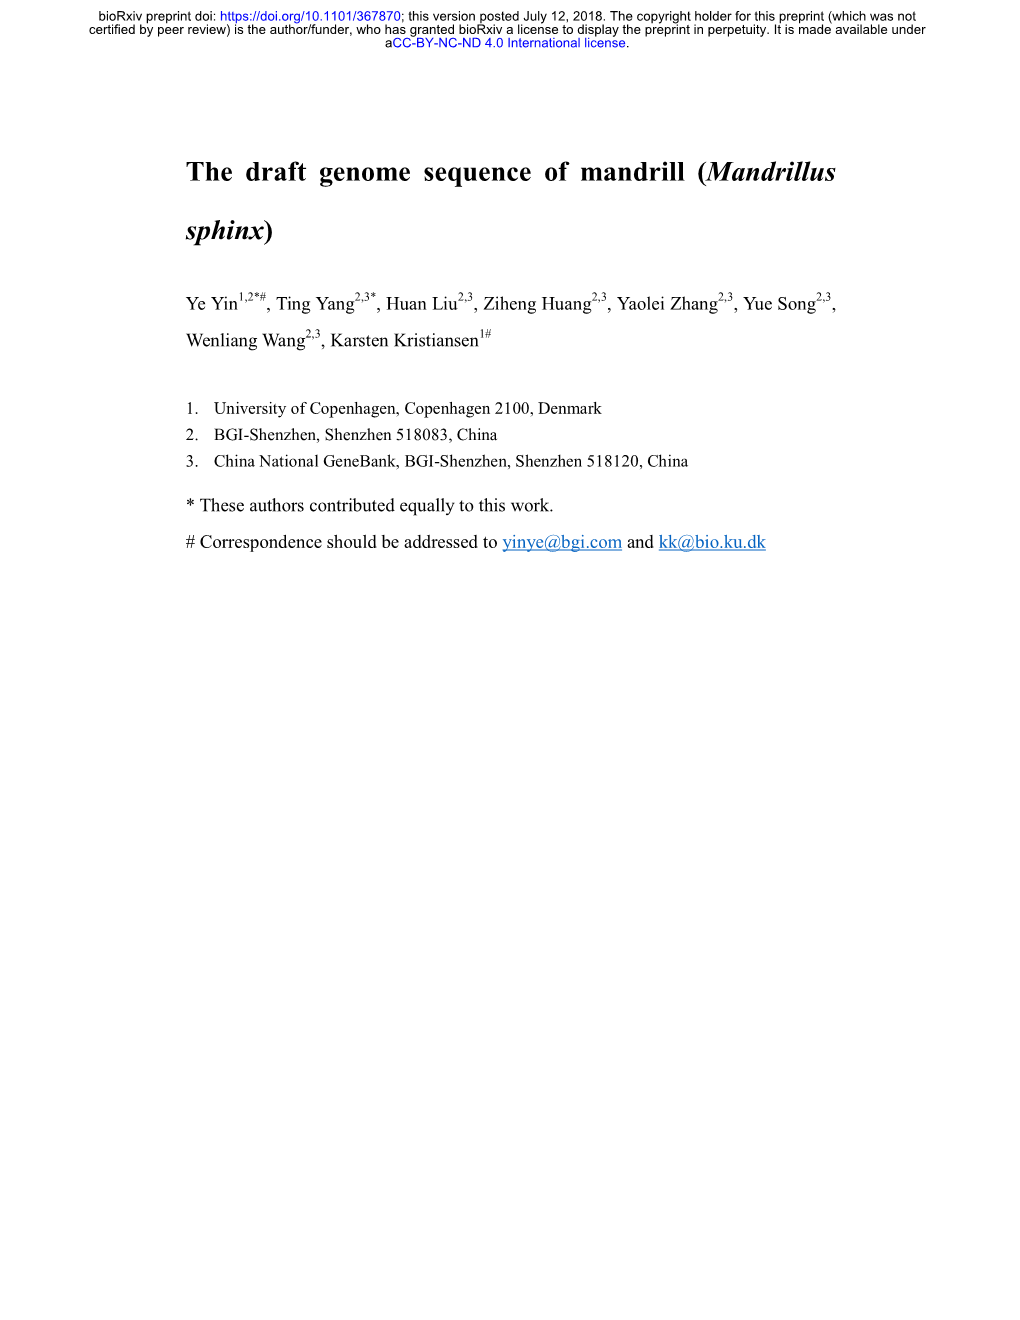 The Draft Genome Sequence of Mandrill (Mandrillus Sphinx)